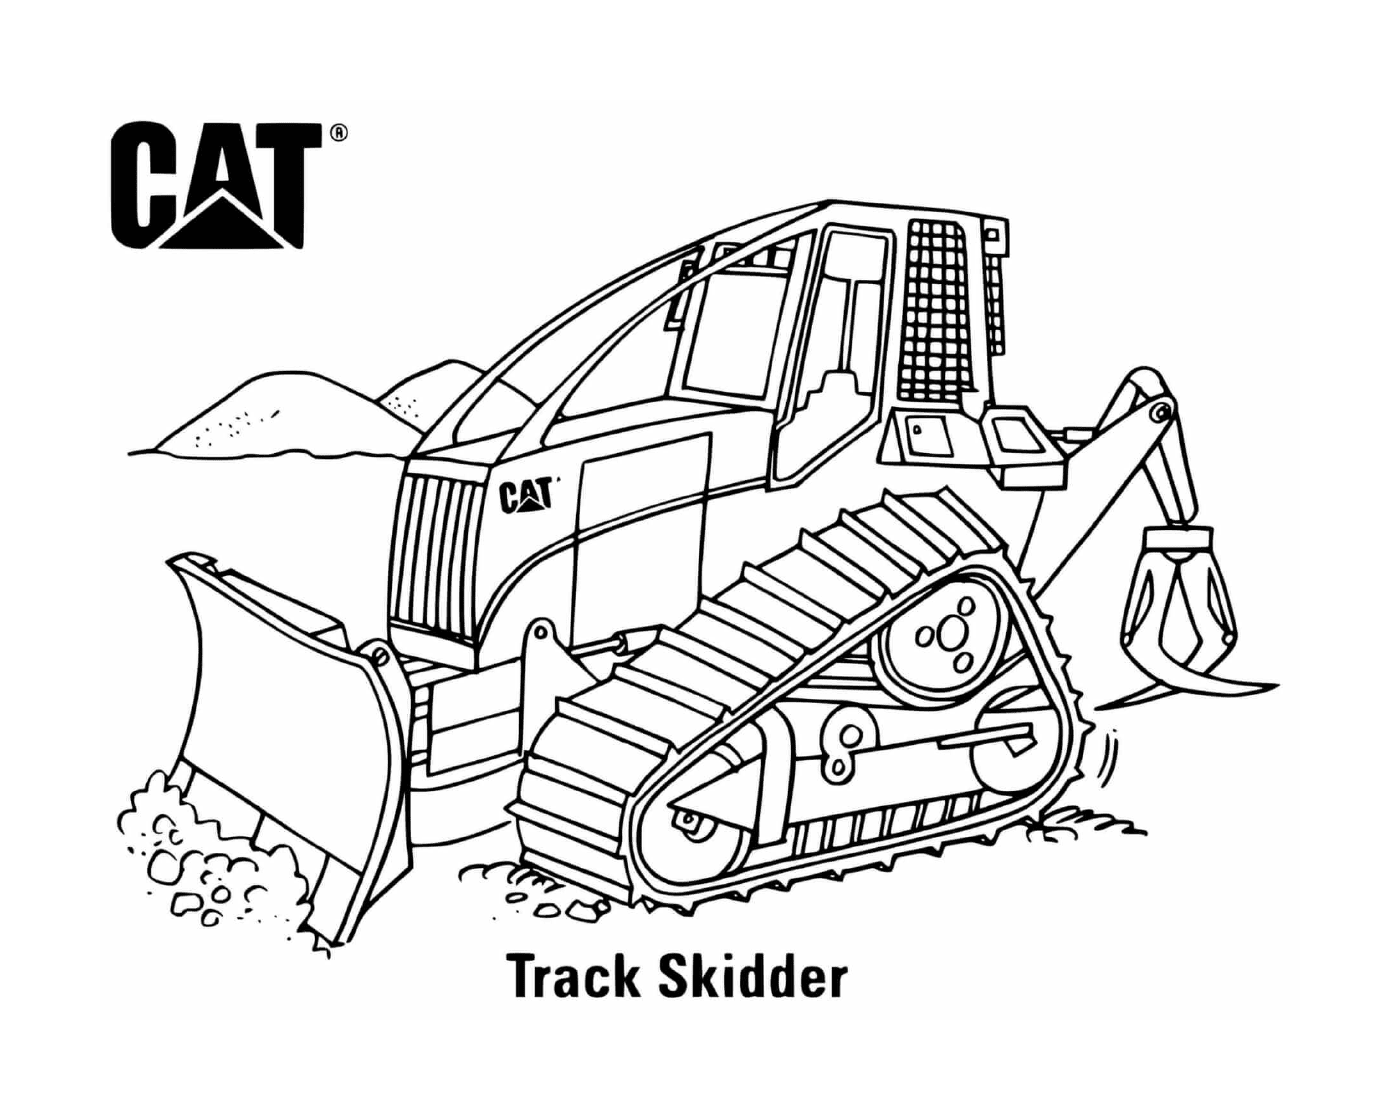  Construction equipment: a track skidder 